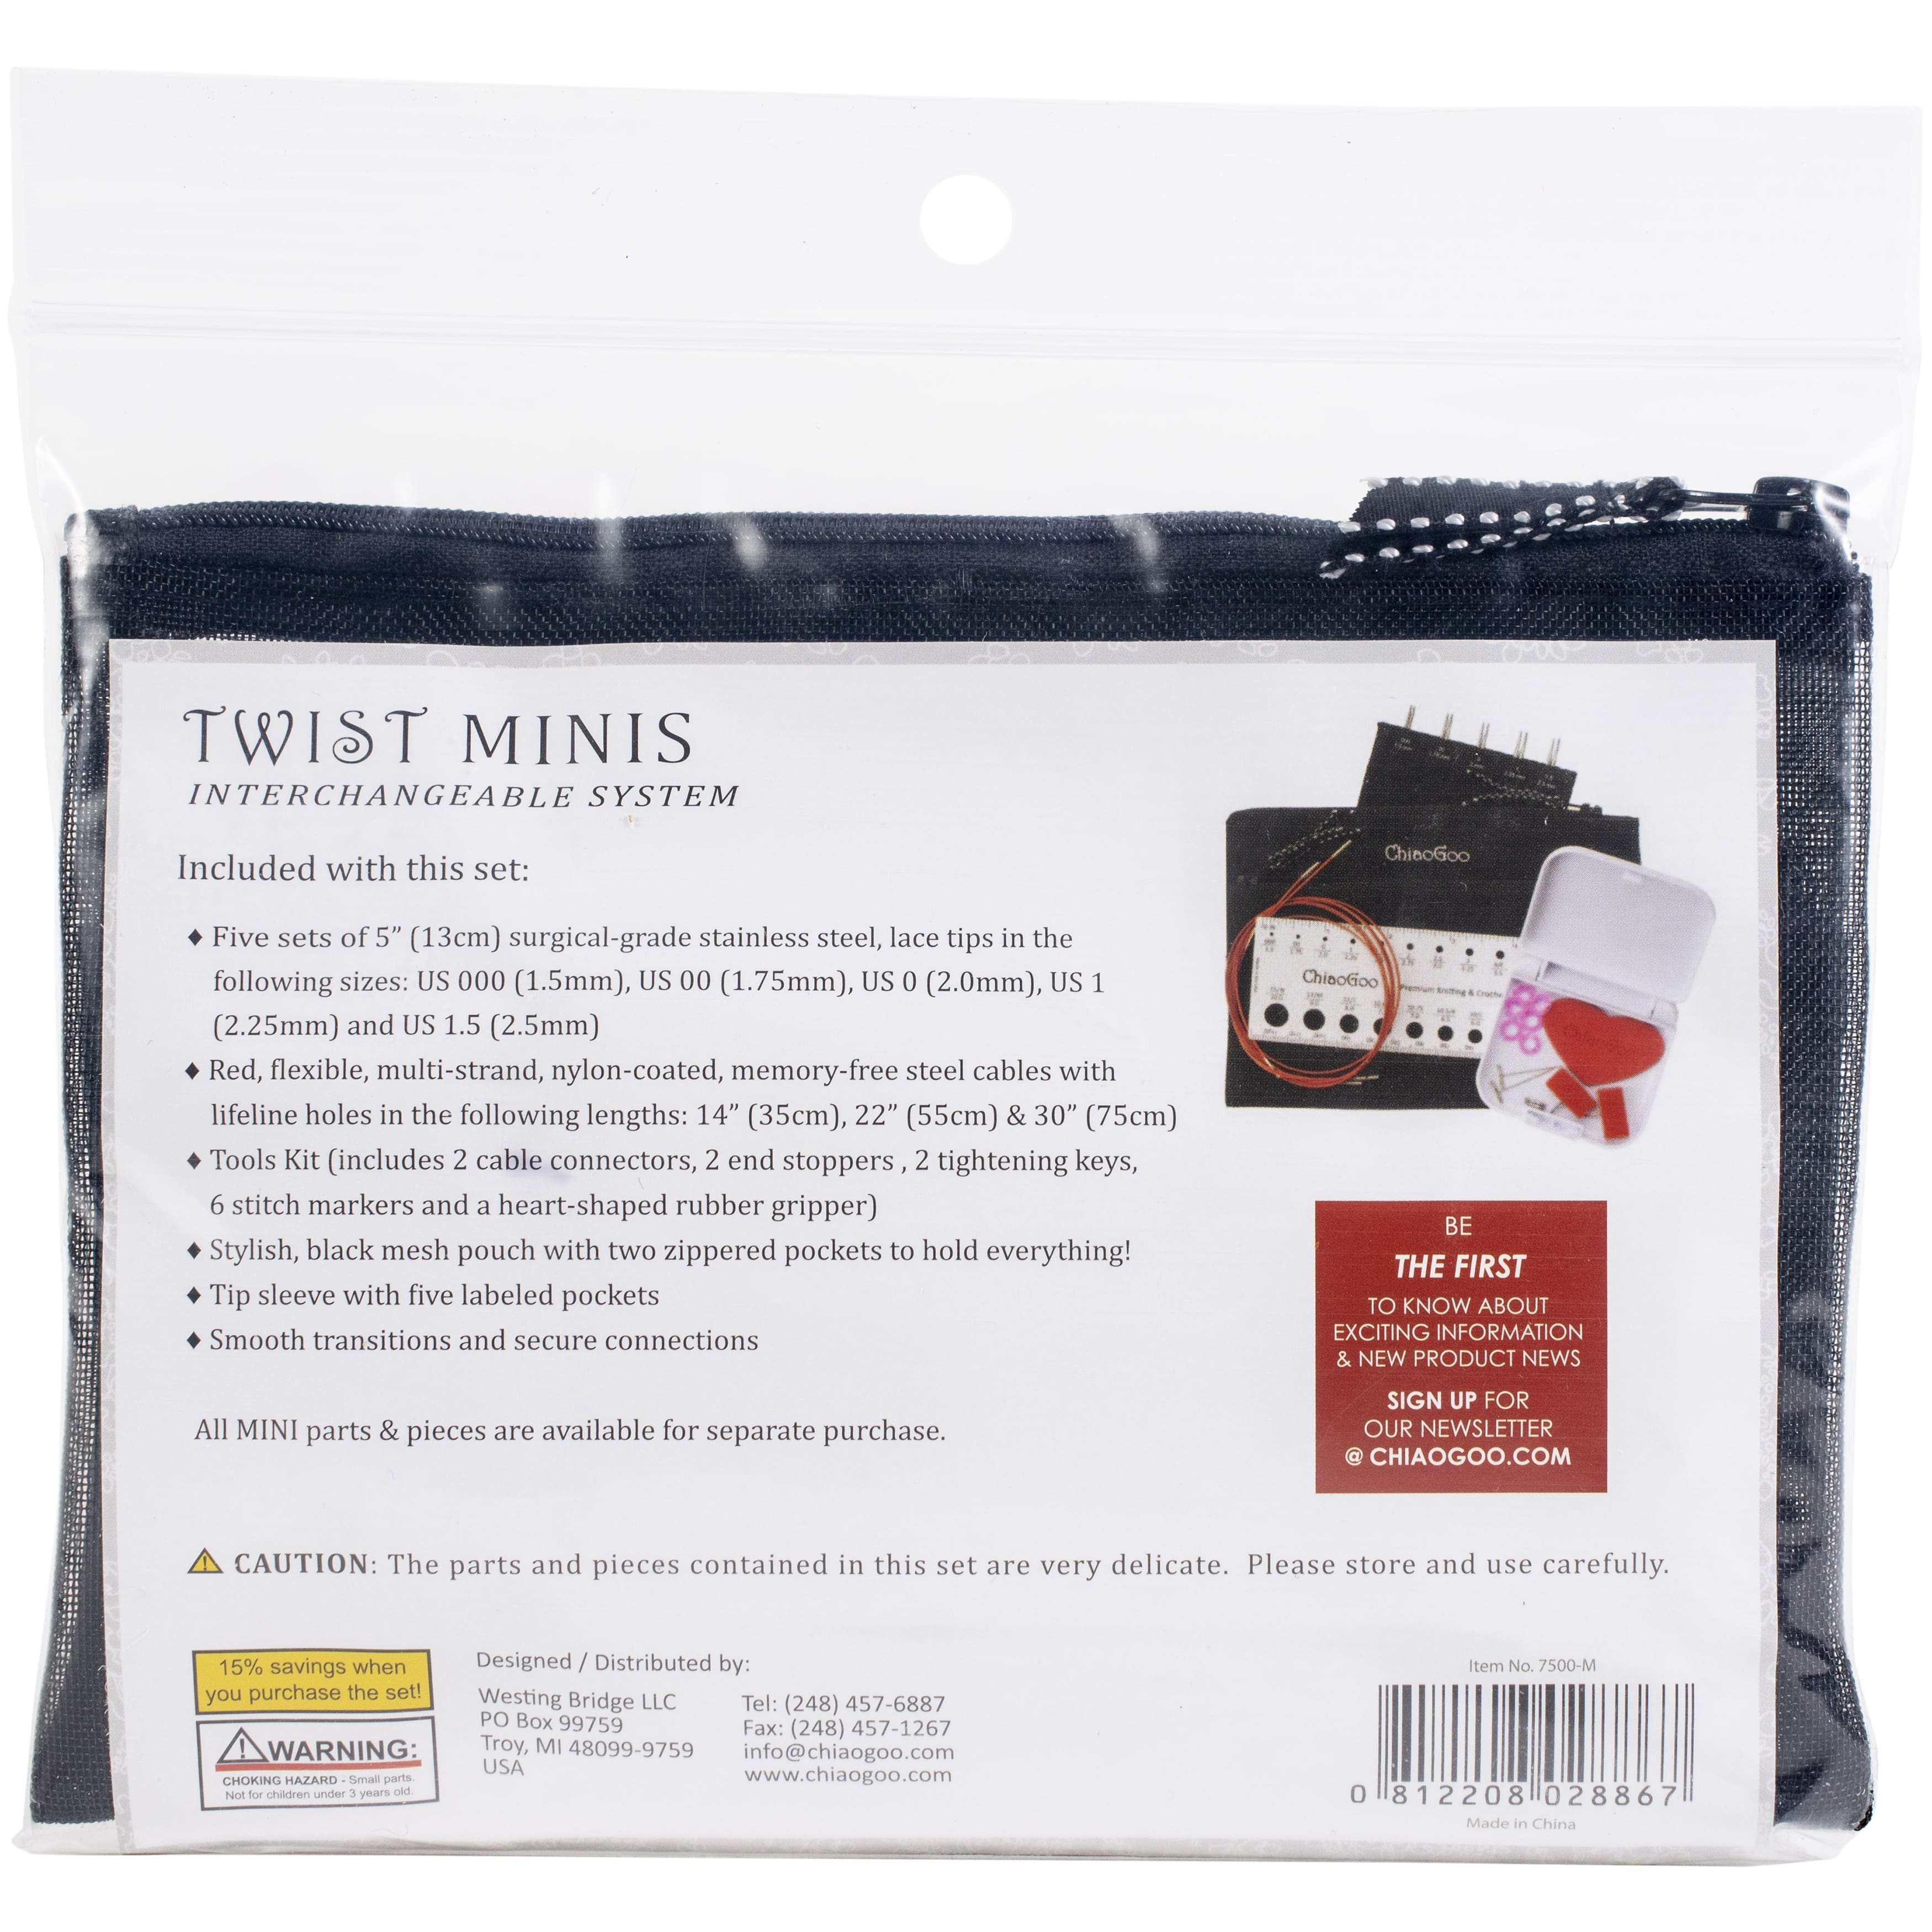 ChiaoGoo Twist 5&#x22; Red Lace Mini Knitting Needle Tip Set